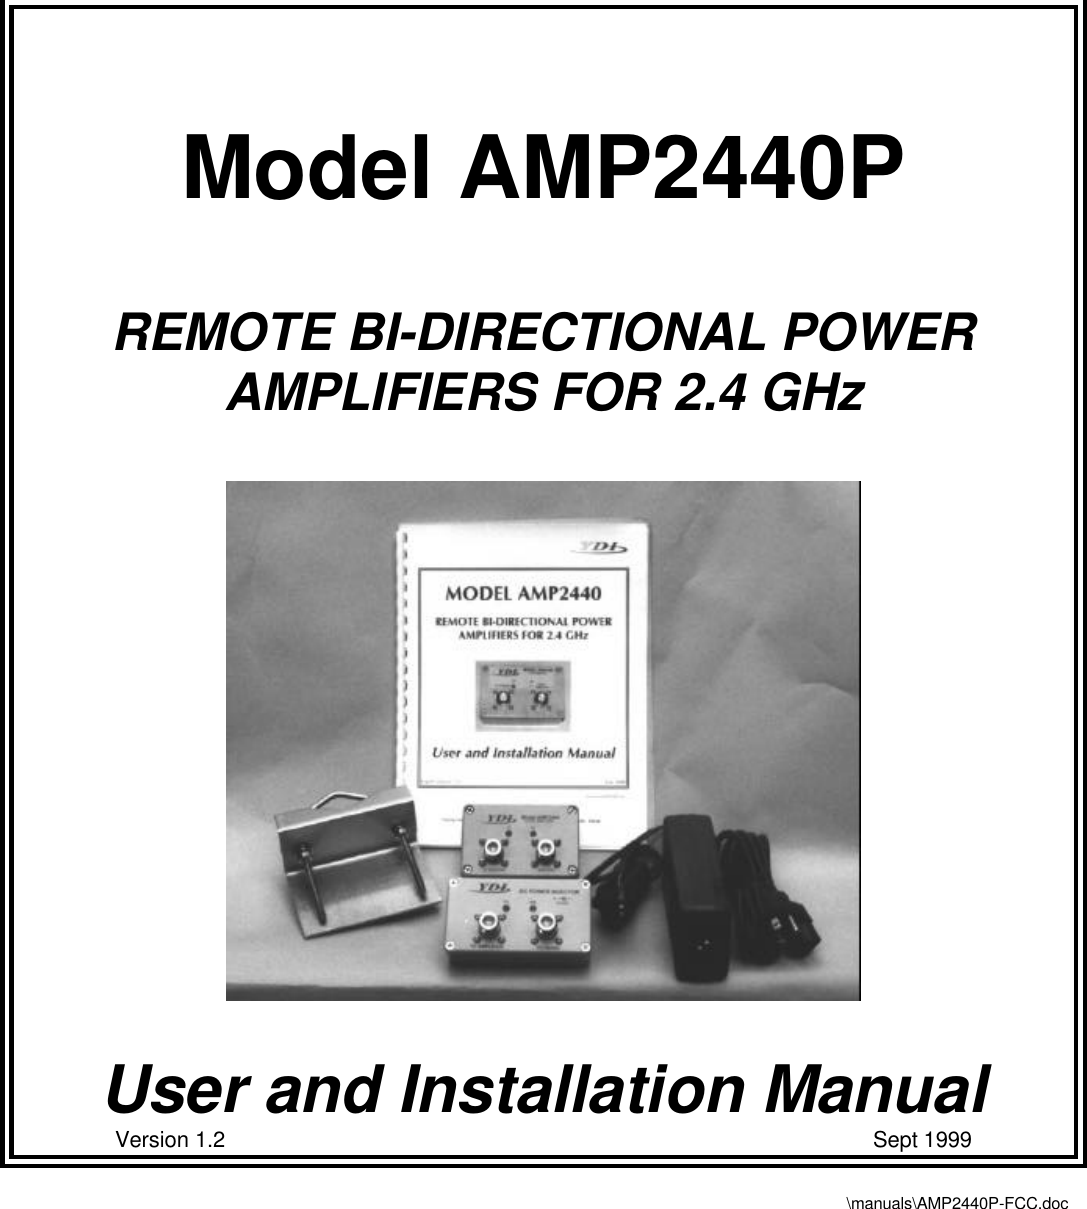 Model AMP2440PREMOTE BI-DIRECTIONAL POWERAMPLIFIERS FOR 2.4 GHzUser and Installation ManualVersion 1.2                                                                                                            Sept 1999\manuals\AMP2440P-FCC.doc